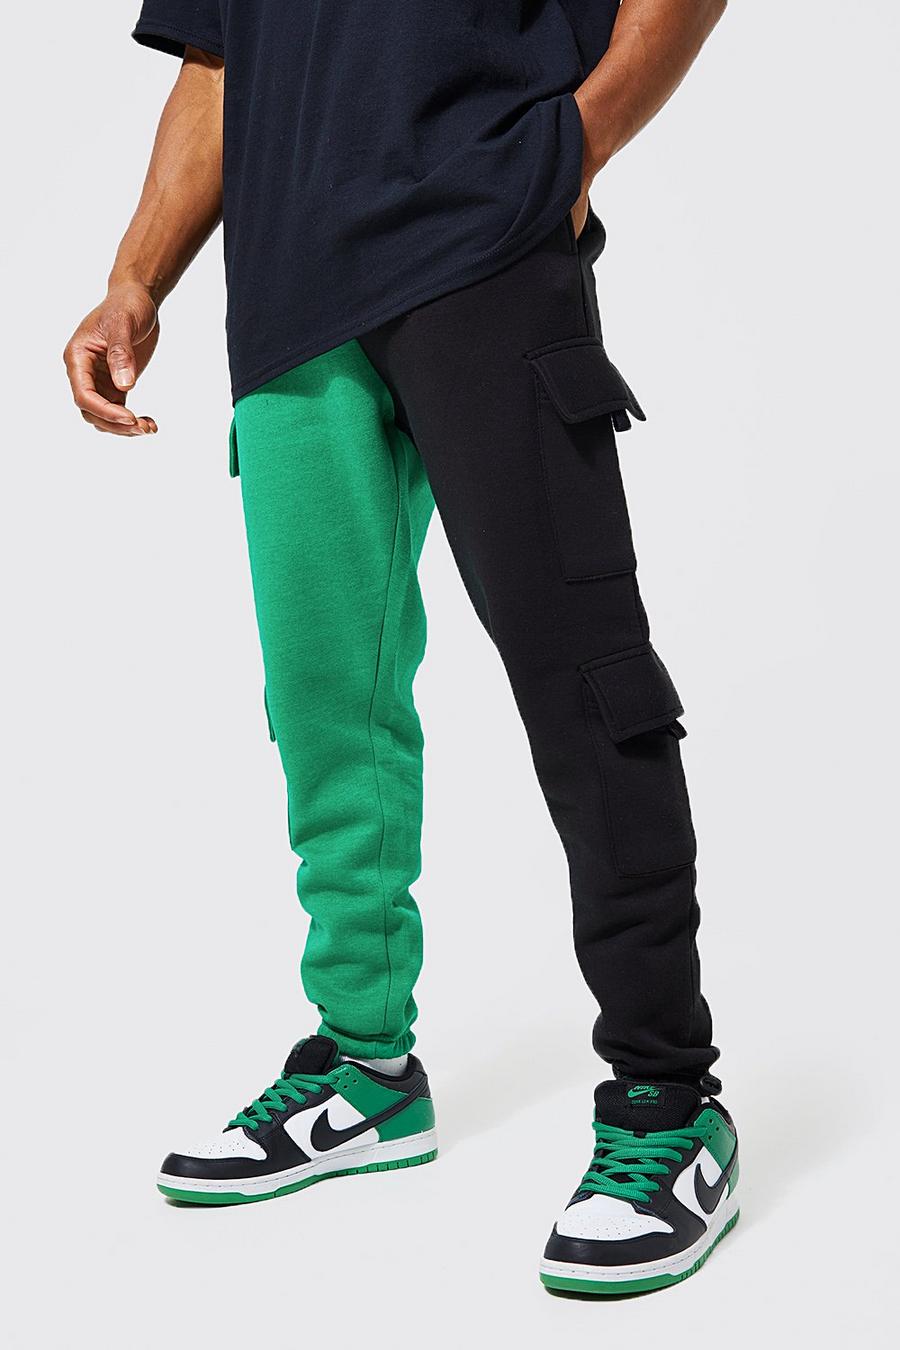 Green verde מכנסי ריצה דגמ'ח עם פאנלים בסגנון שימושי בגזרה צרה